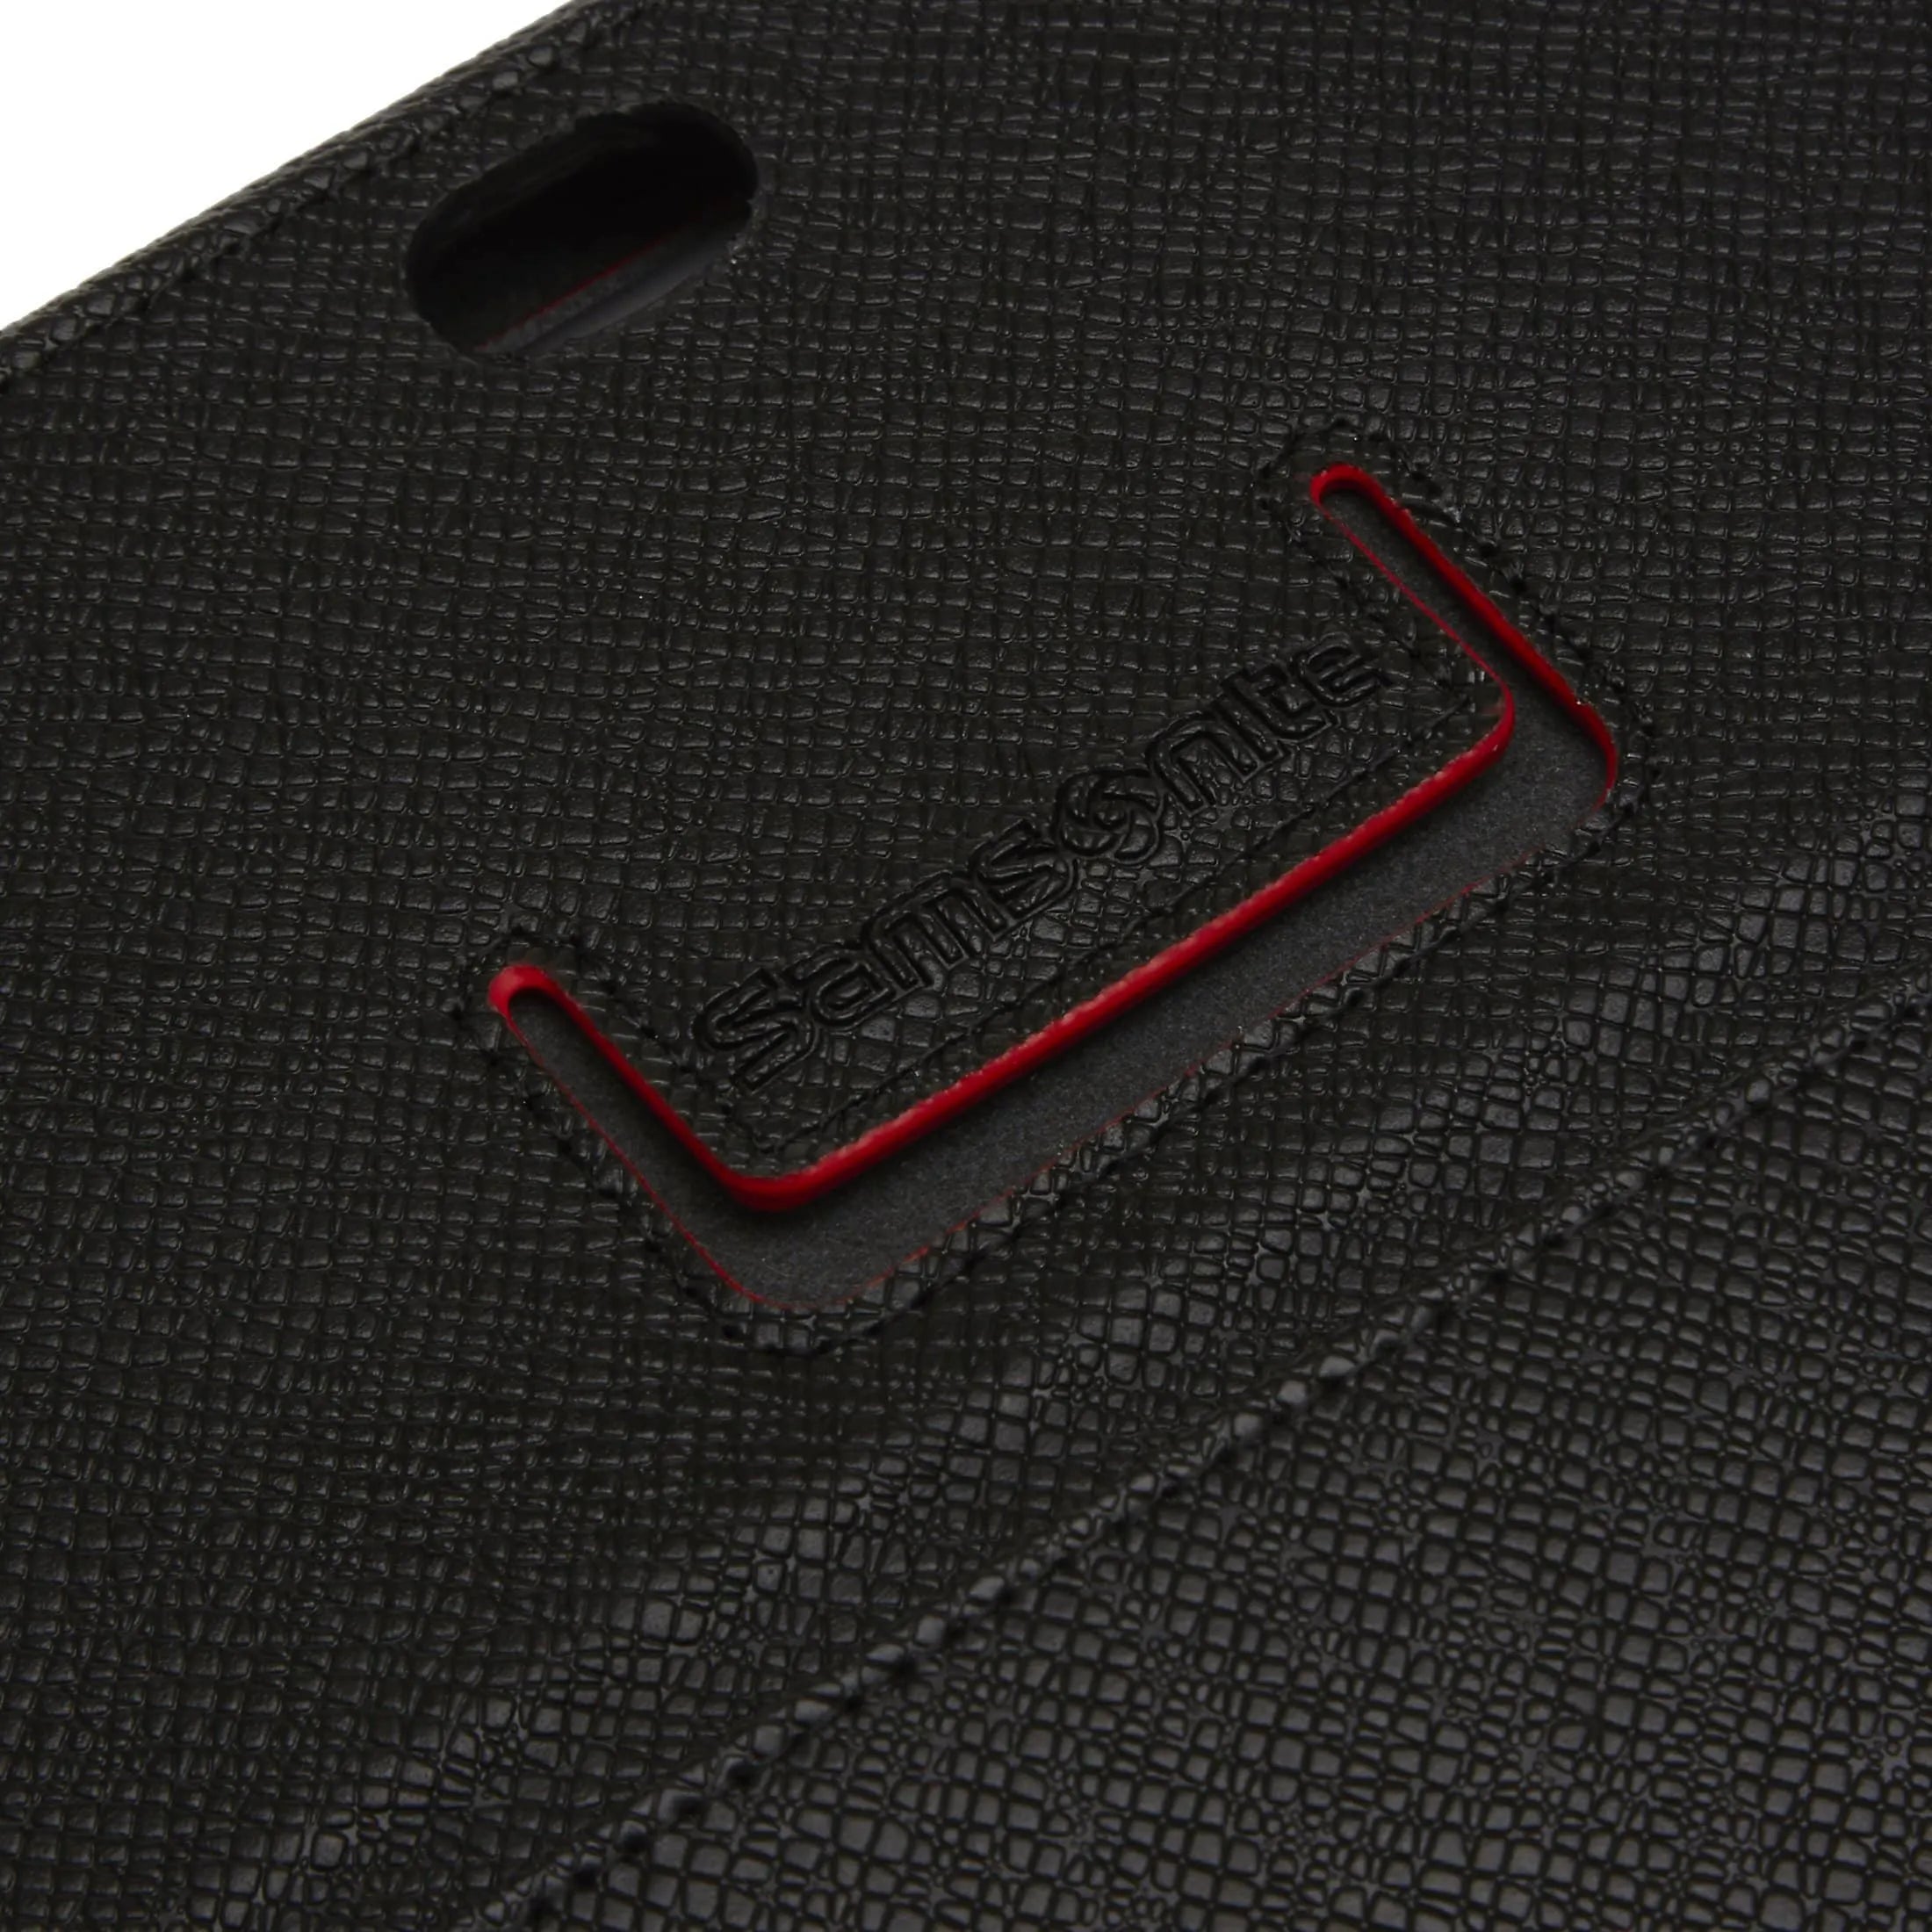 Samsonite Mobile Pro Leather Portofolio 10.1 Tablethülle 26 cm - dark brown